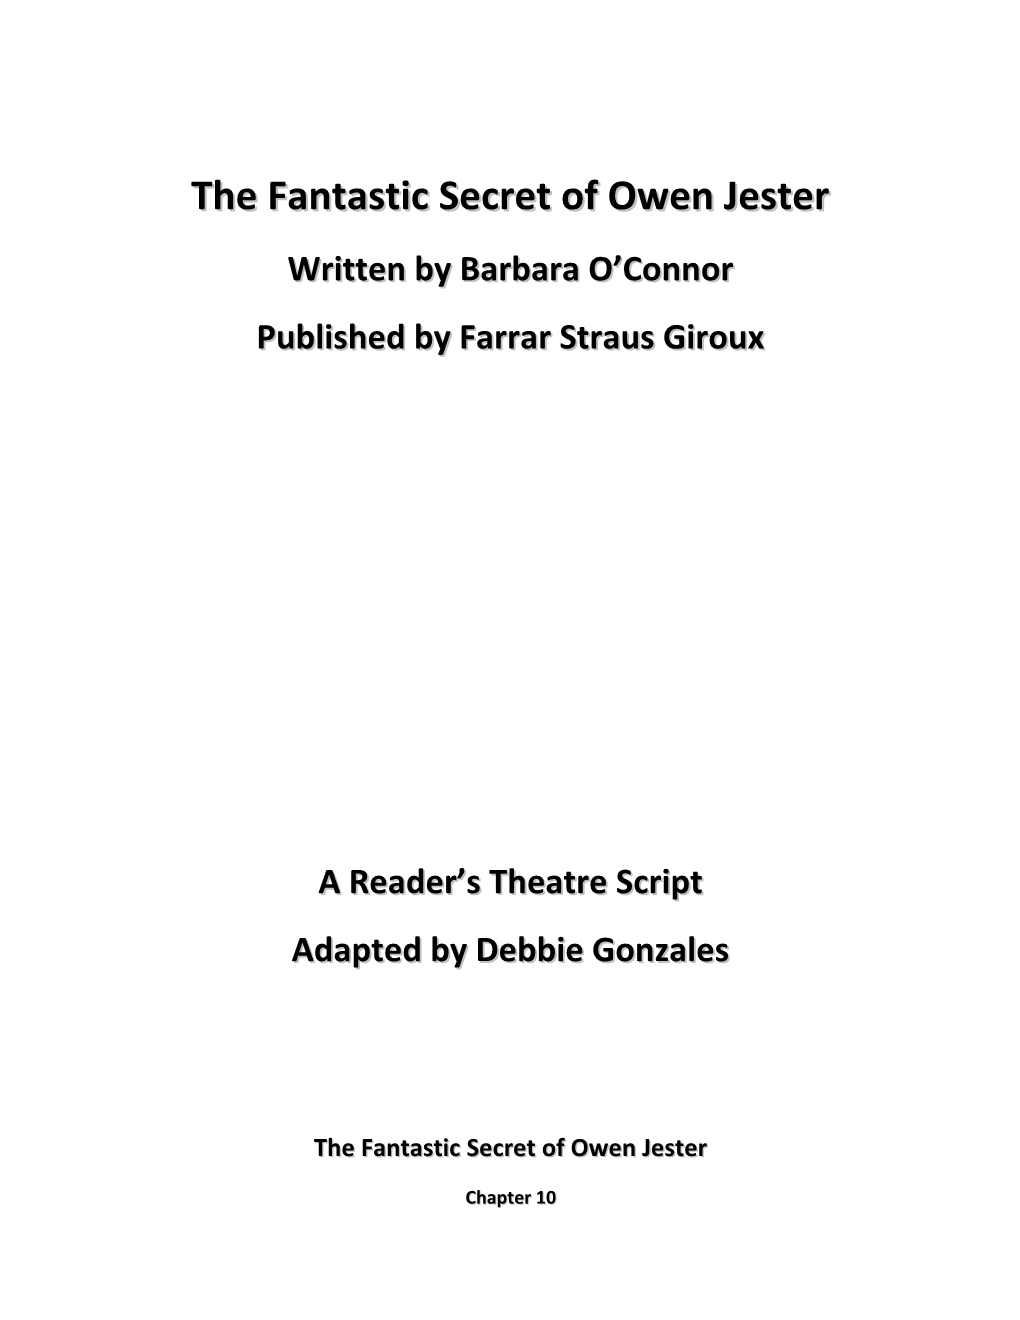 The Fantastic Secret of Owen Jester (61-66) 3